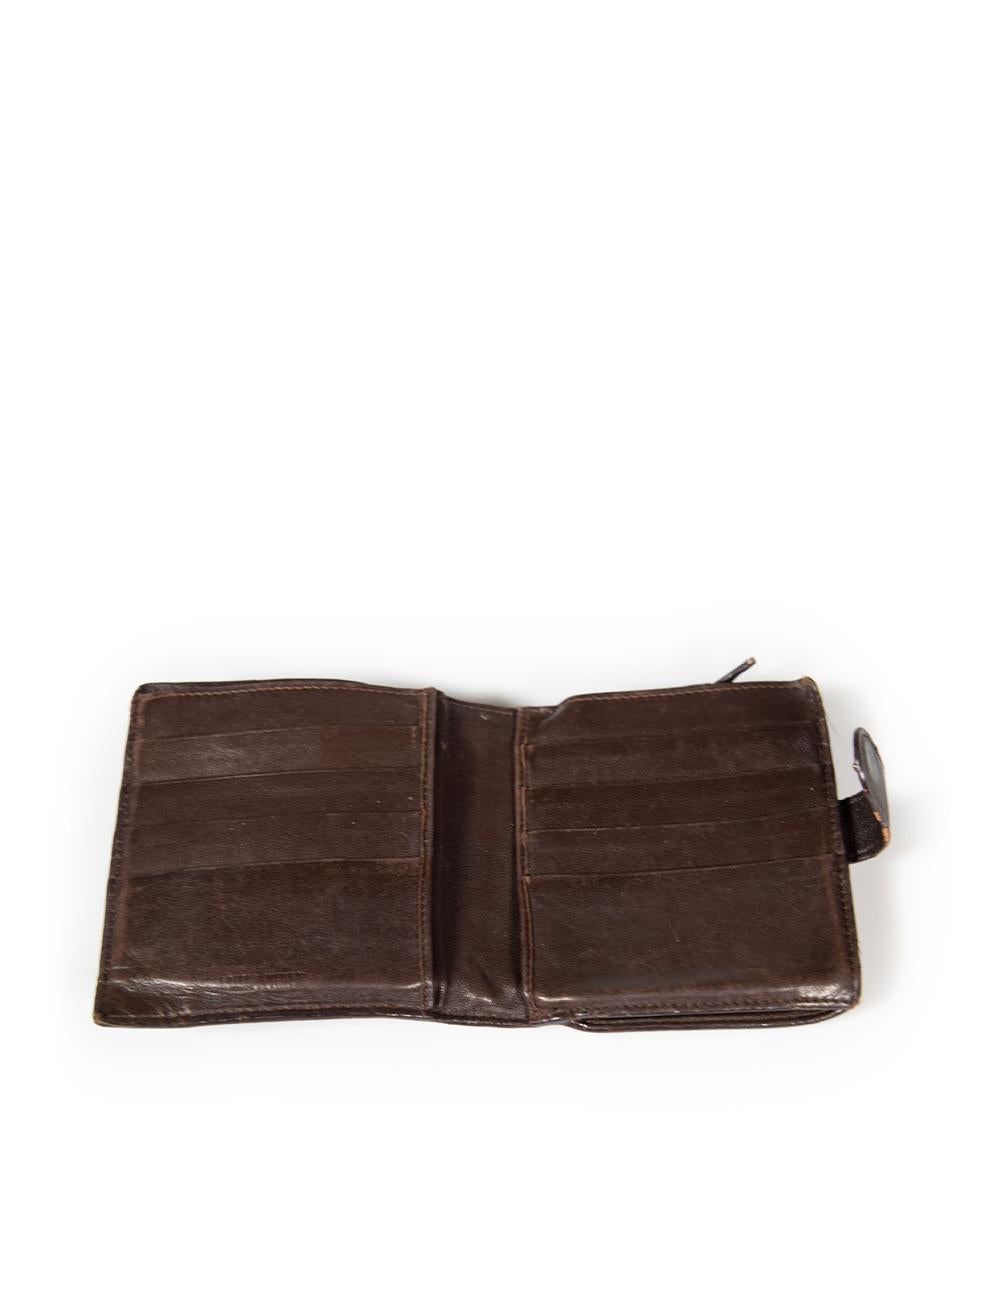 Bottega Veneta Brown Leather Intrecciato Wallet For Sale 1